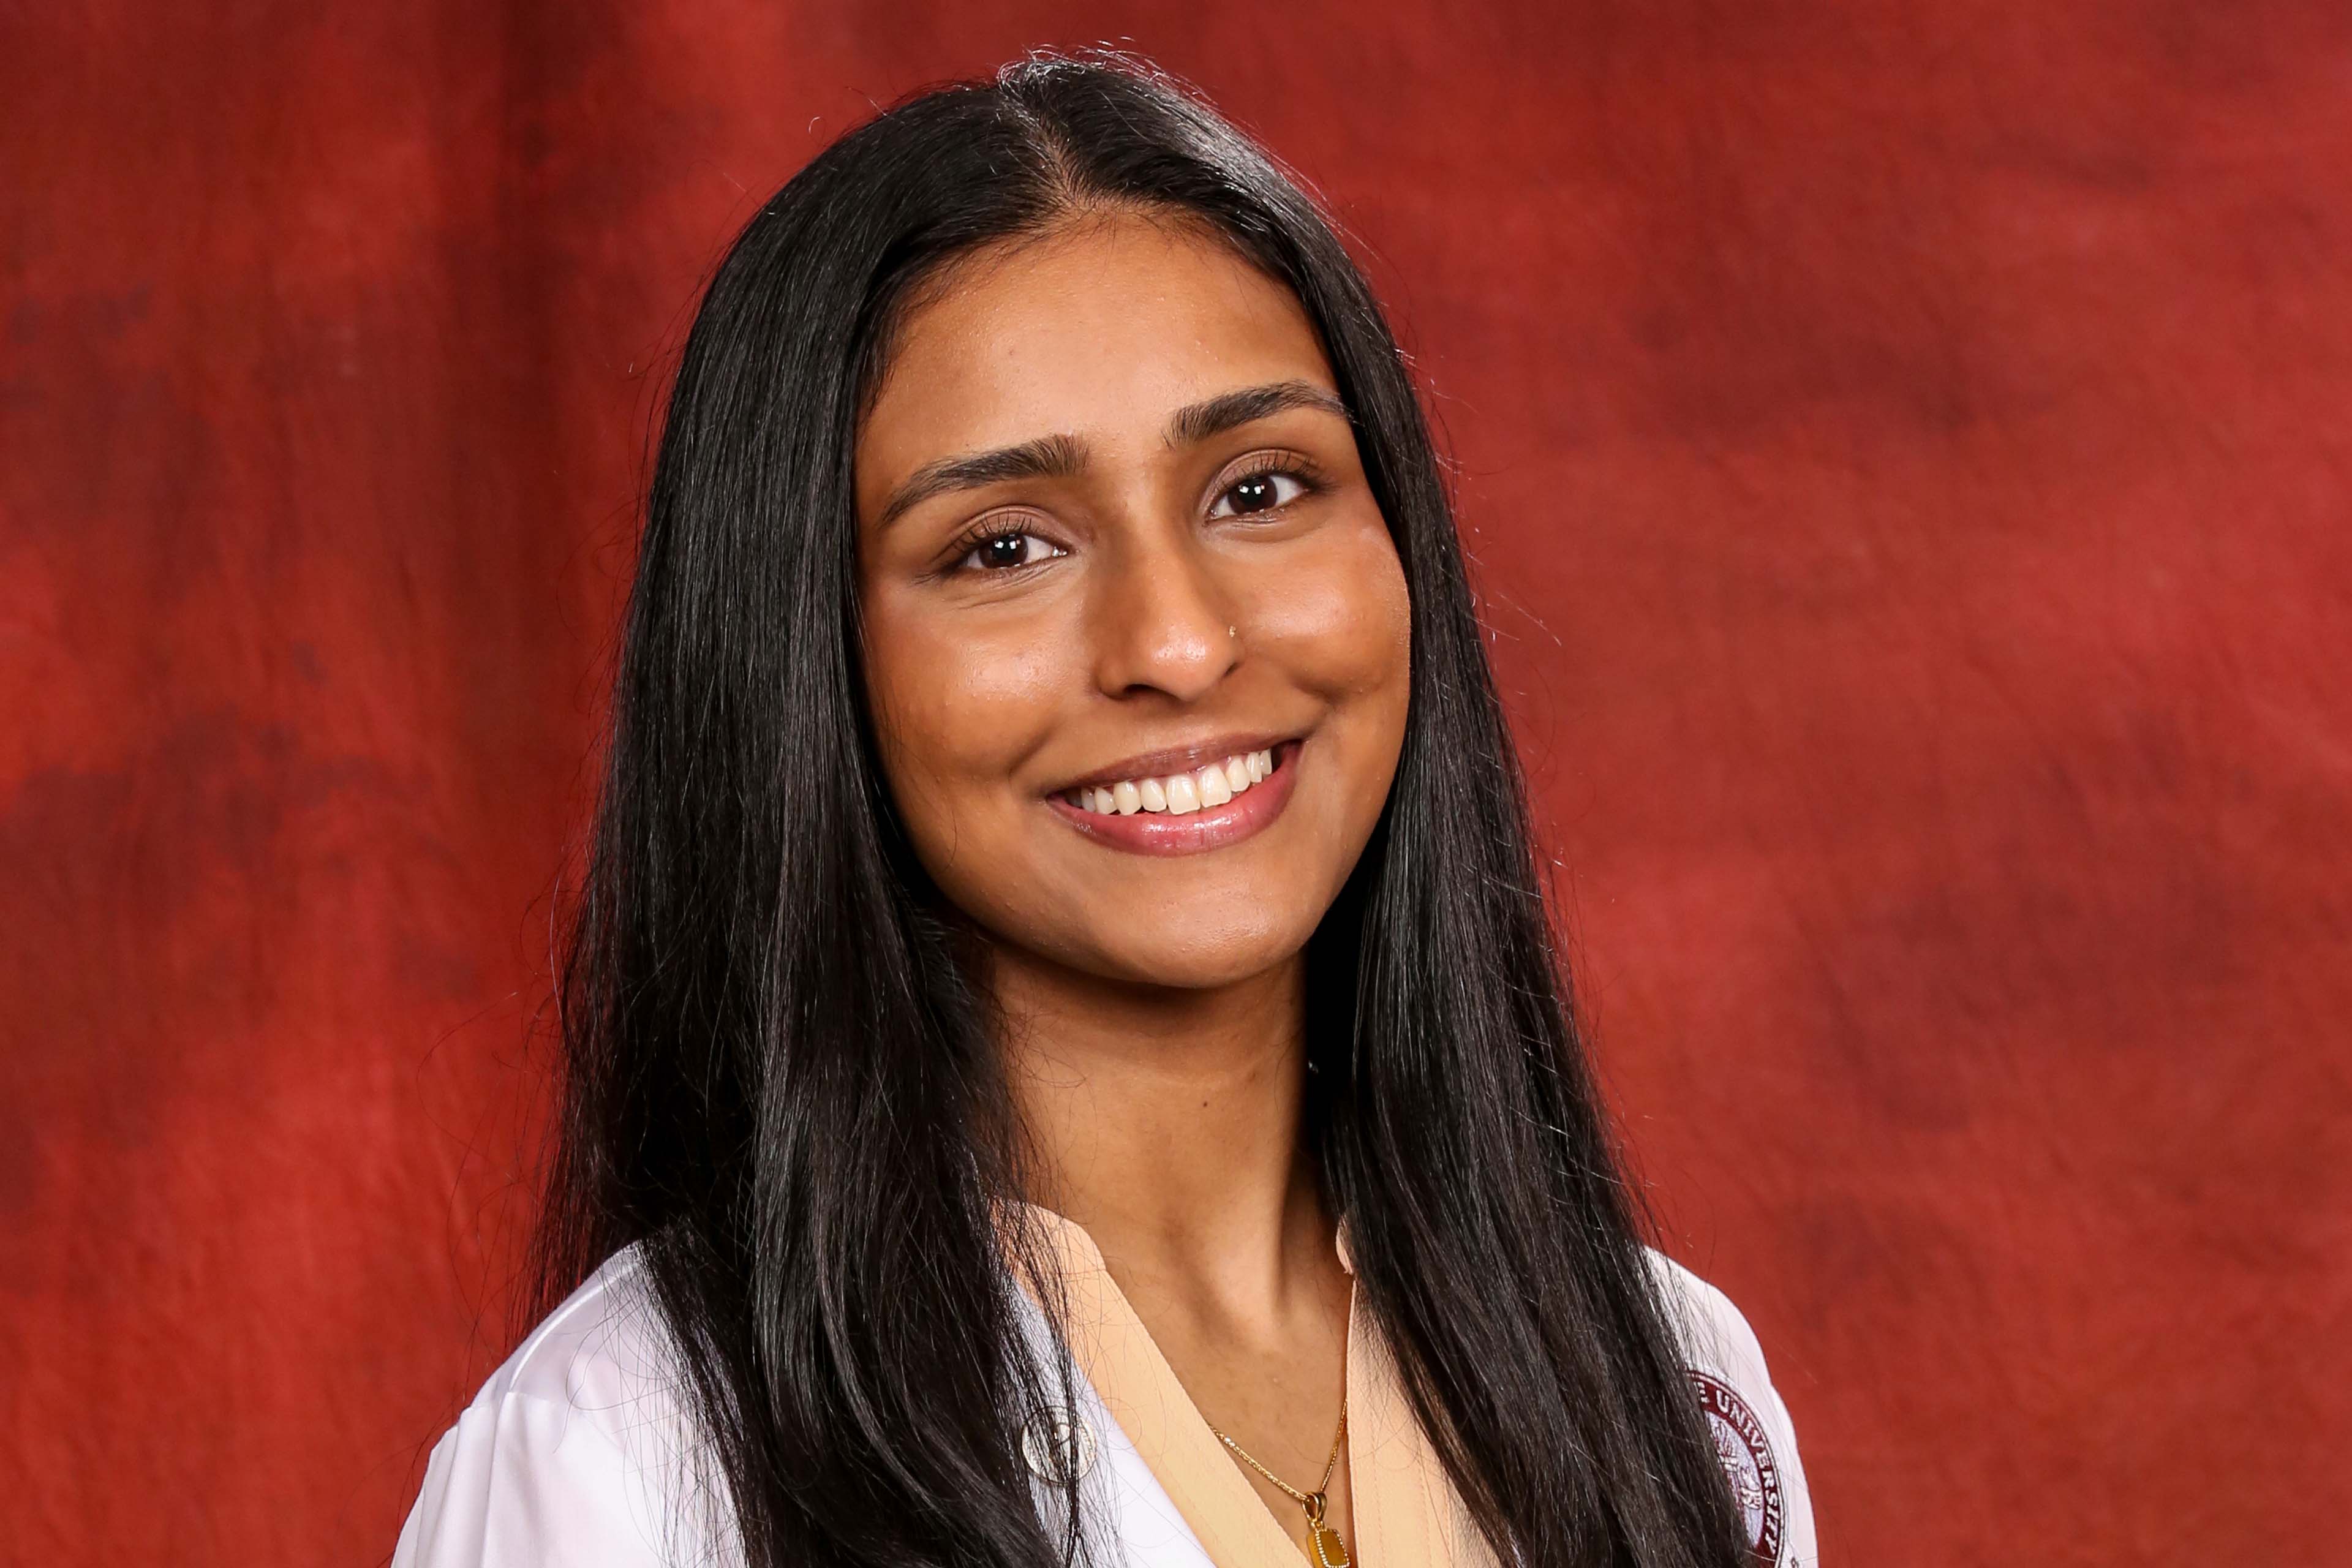 Dhenu Patel awarded Van Vessem Memorial Scholarship